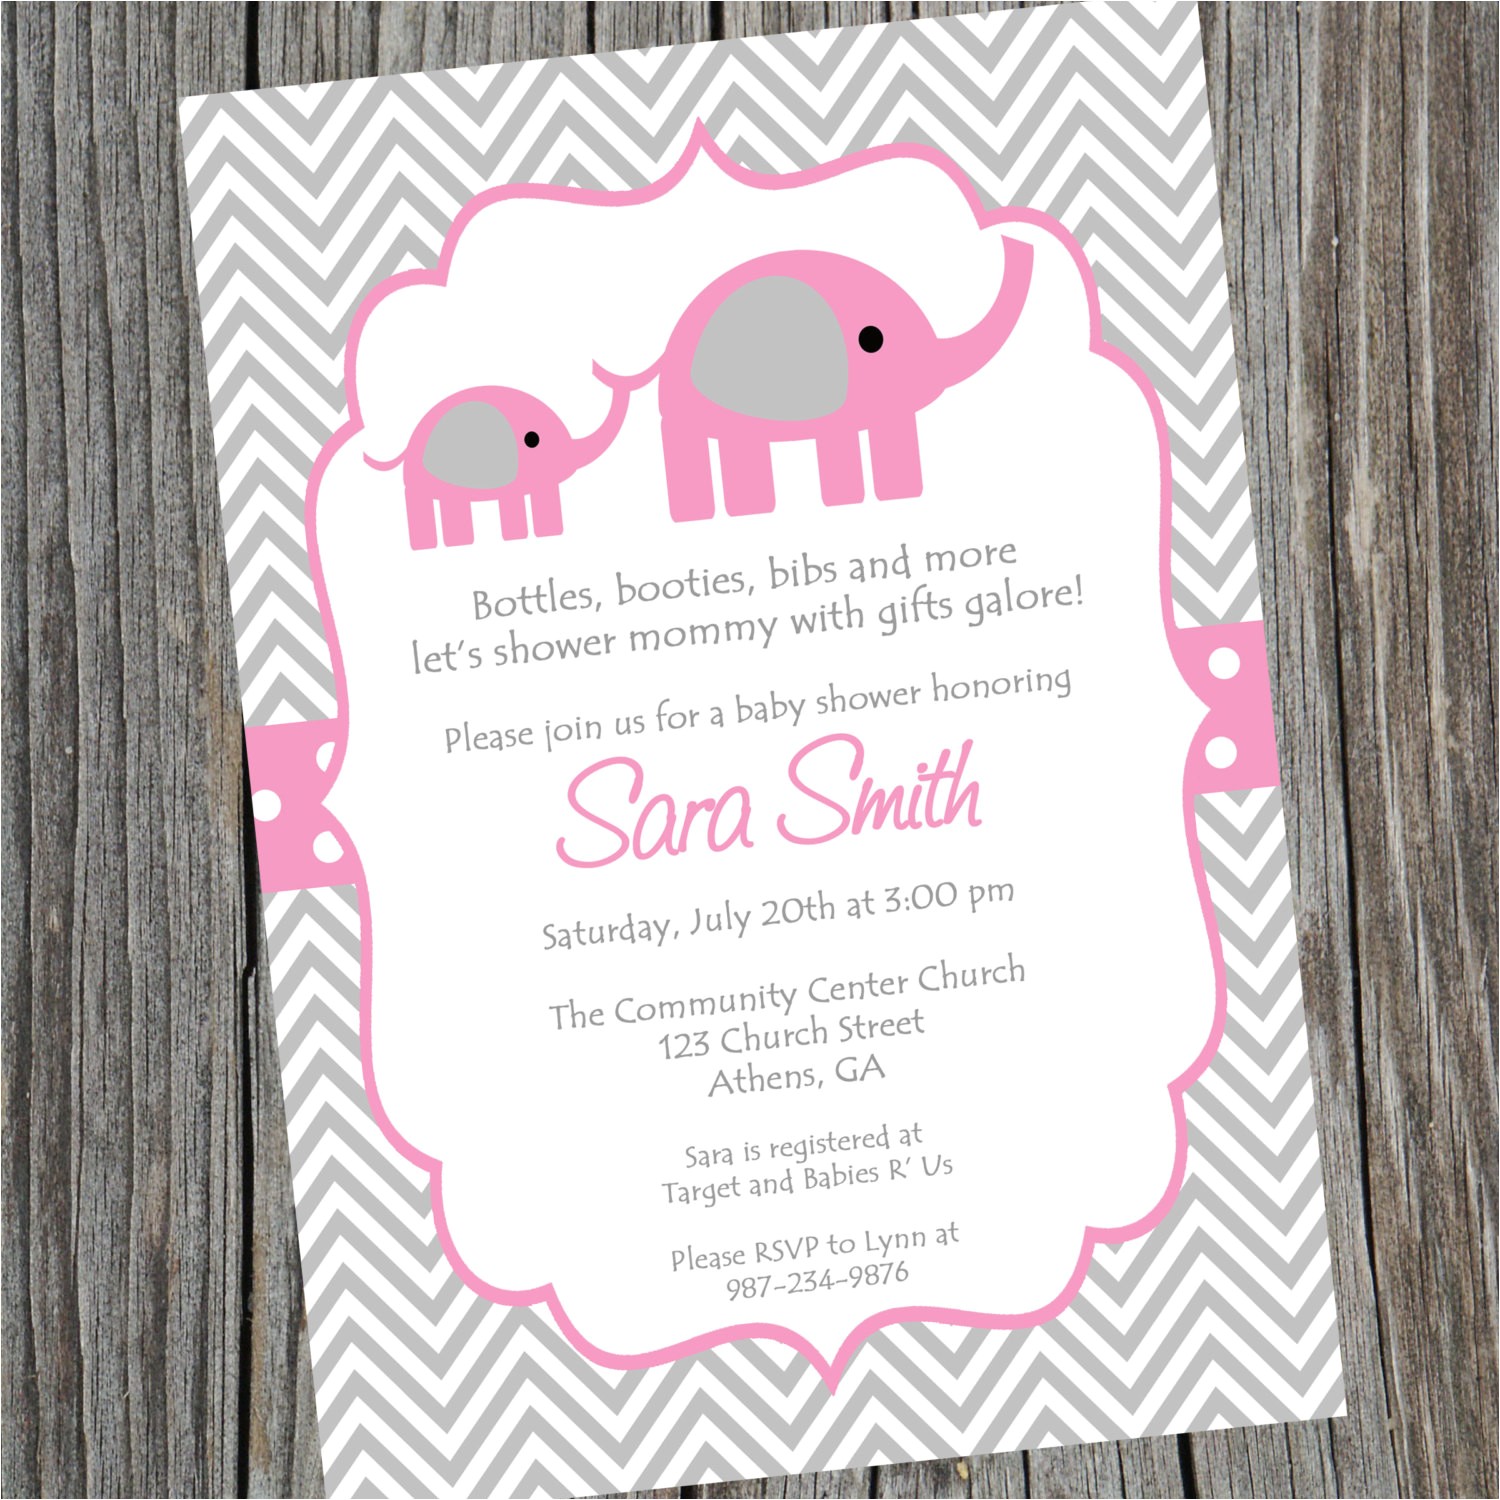 Party City Baby Shower Invitations Elephant Baby Shower Invitations Party City – Invitations